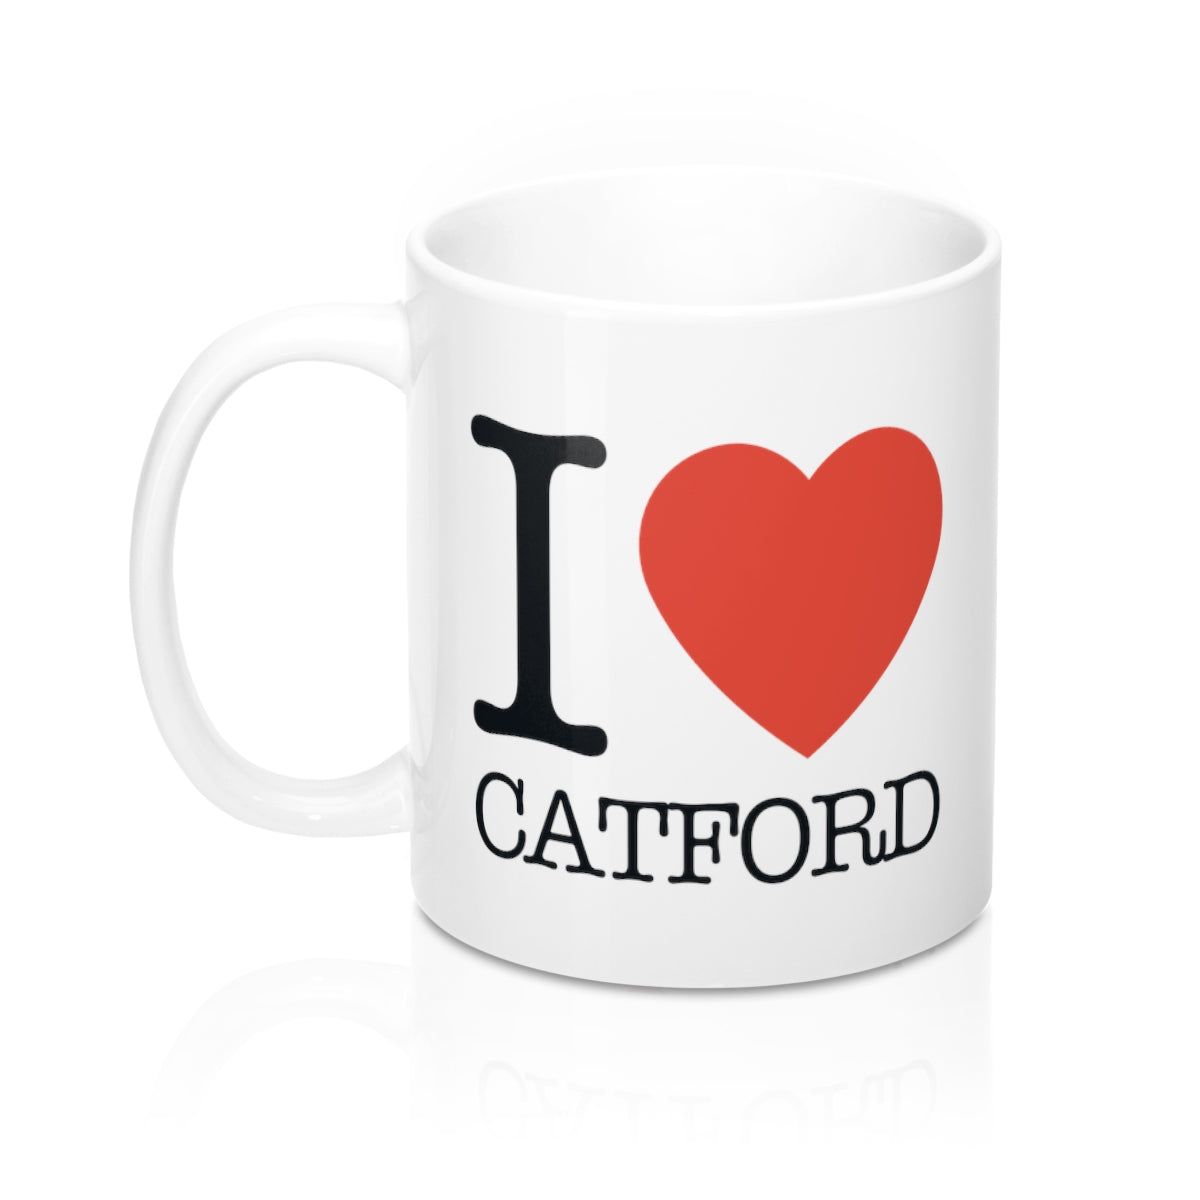 I Heart Catford Mug